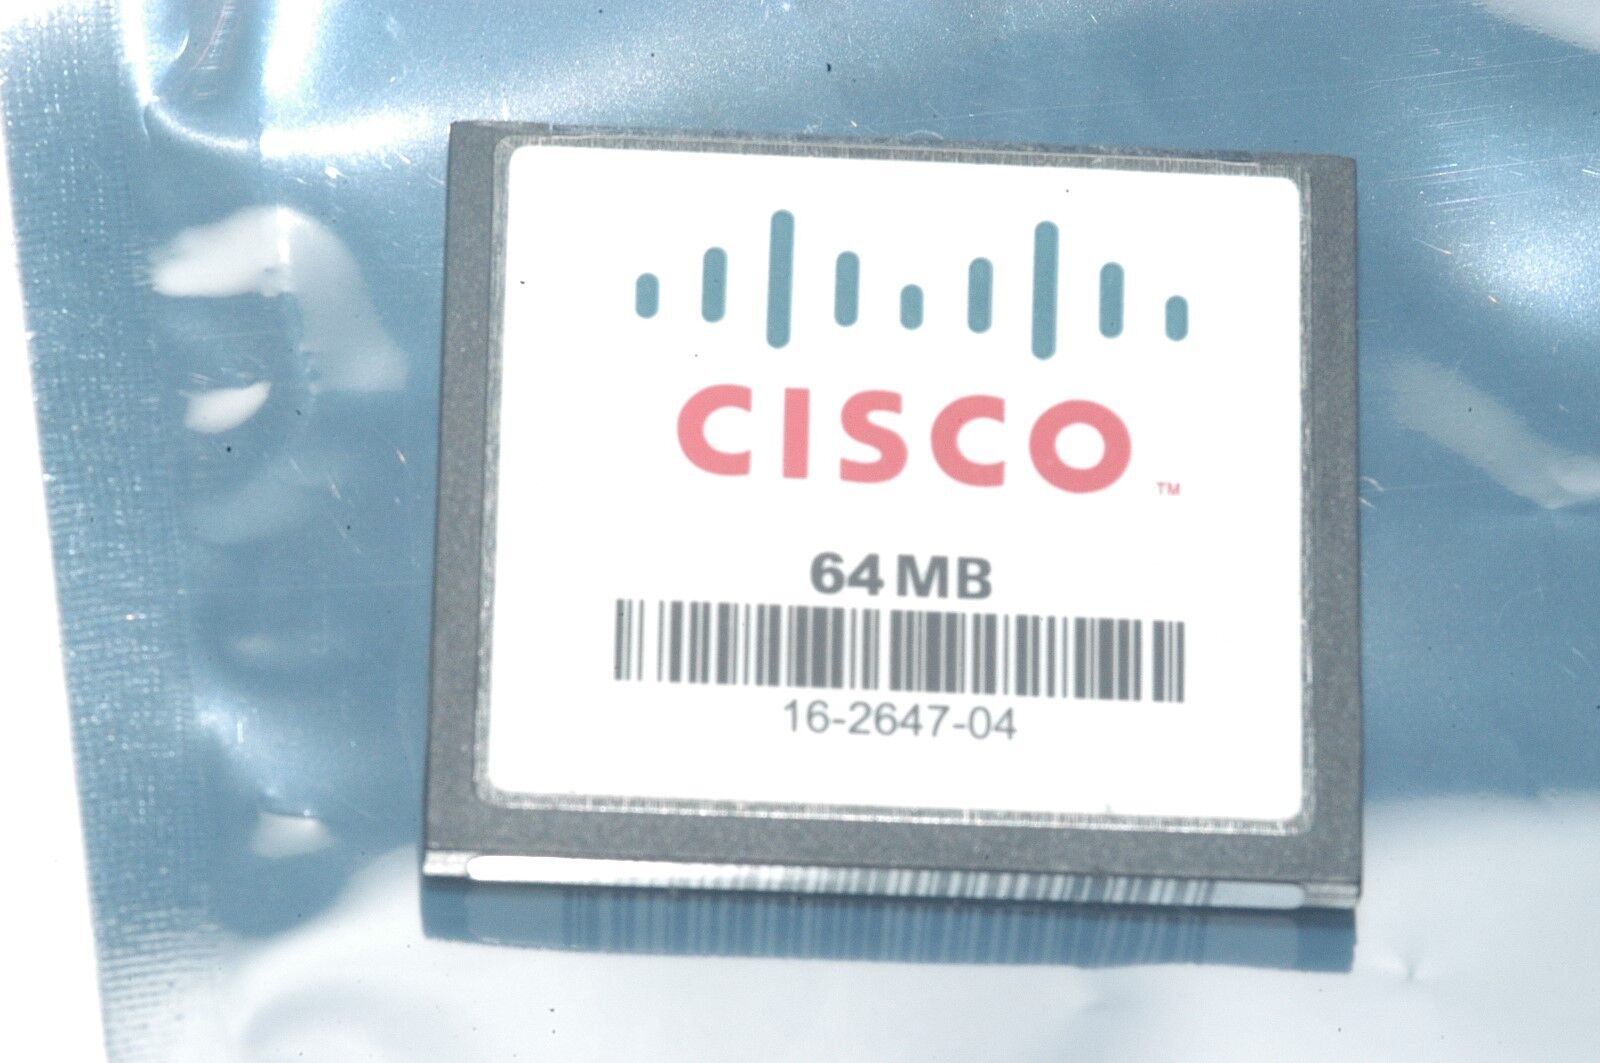 GENUINE Cisco 64MB 50-pin Compact Memory Flash Card 16-2647-04 CCE064JCHS5MB08H